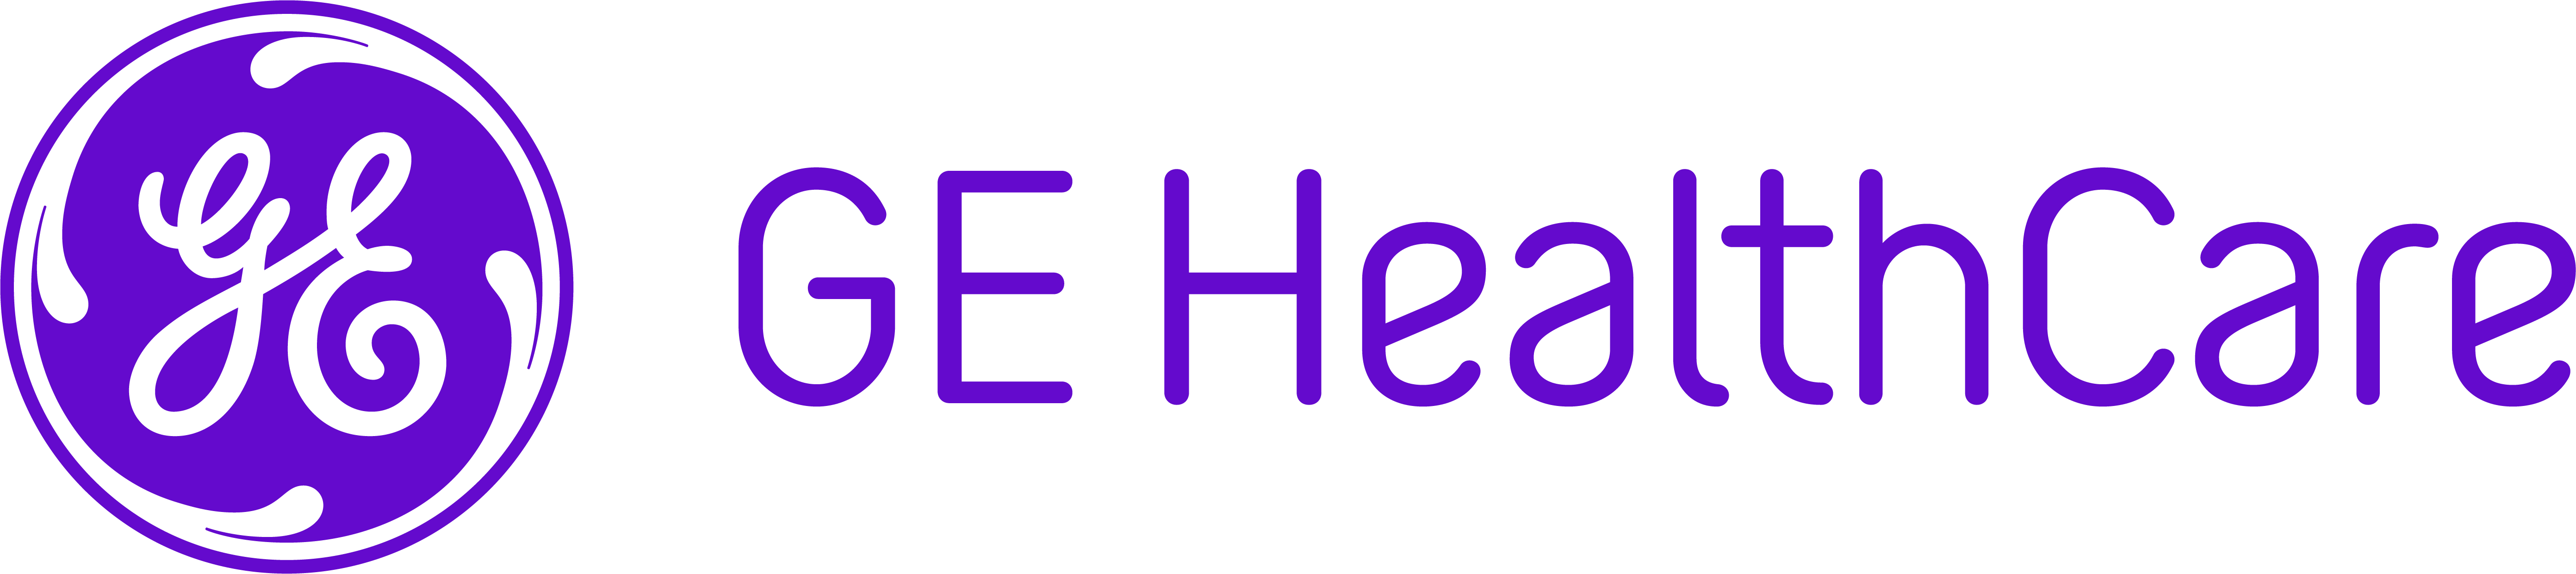 GE Healthcare logo.